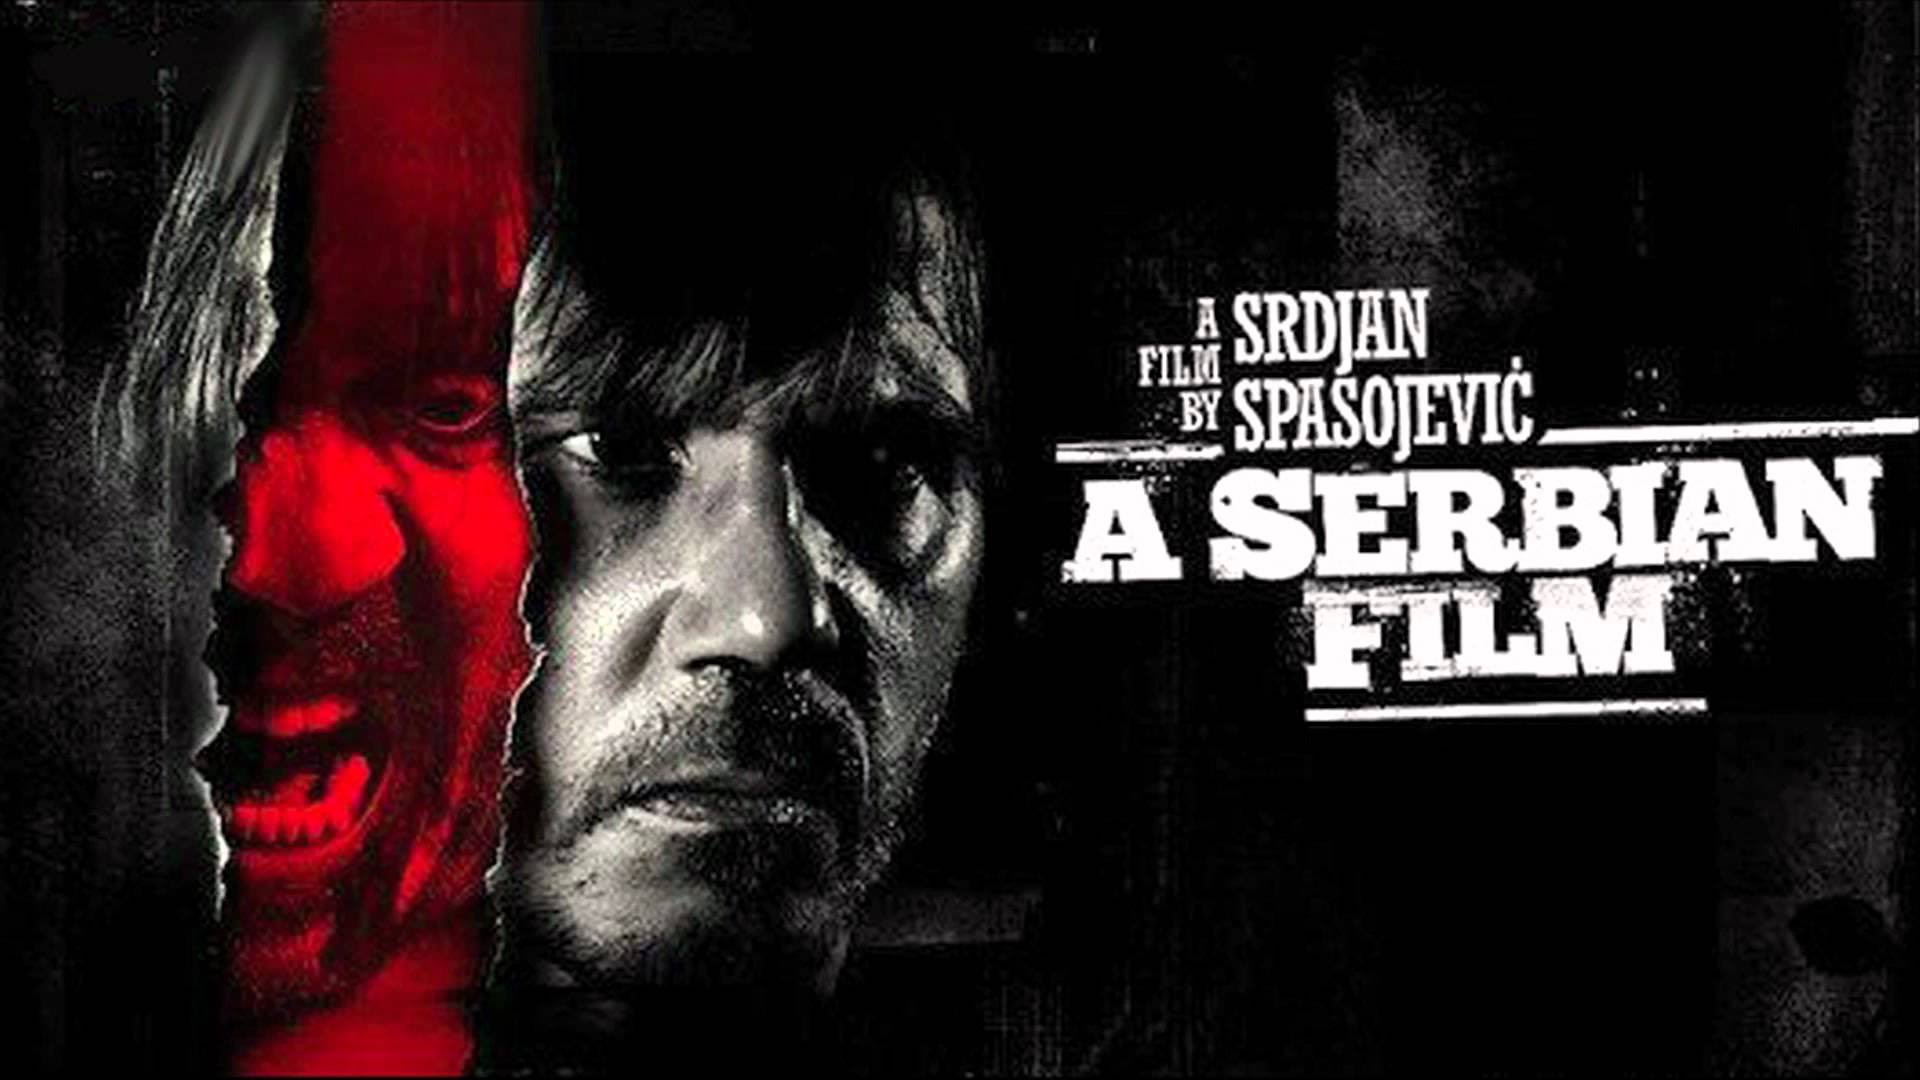 A SERBIAN FILM